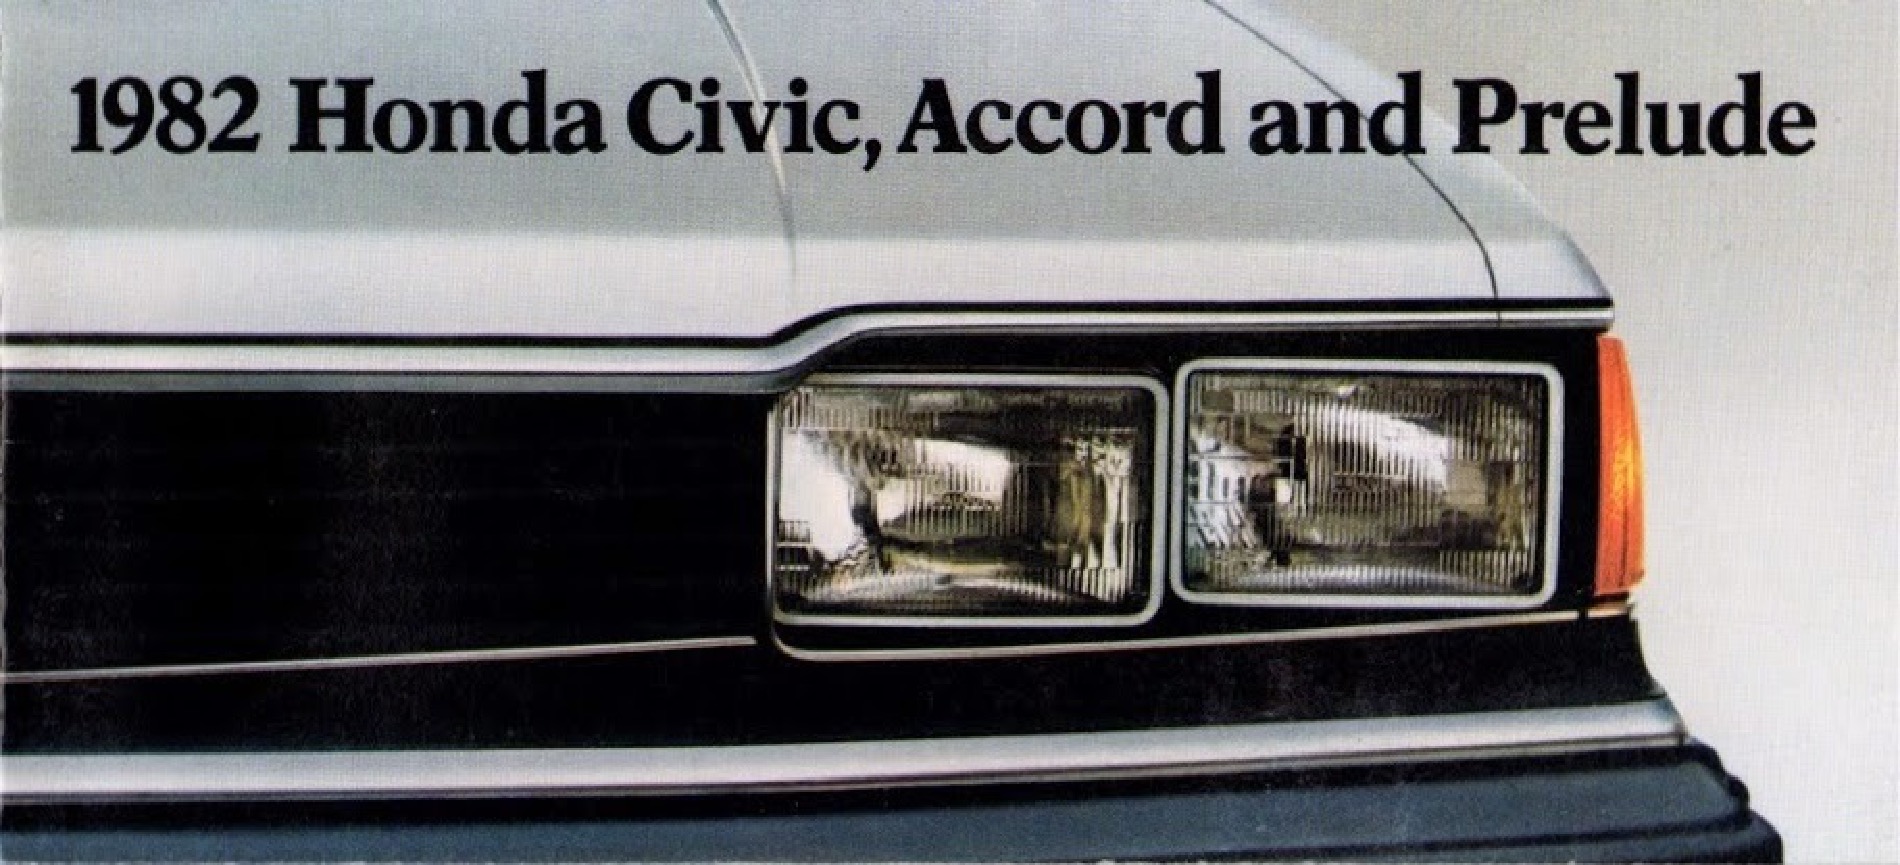 1982 Honda Model Range Brochure